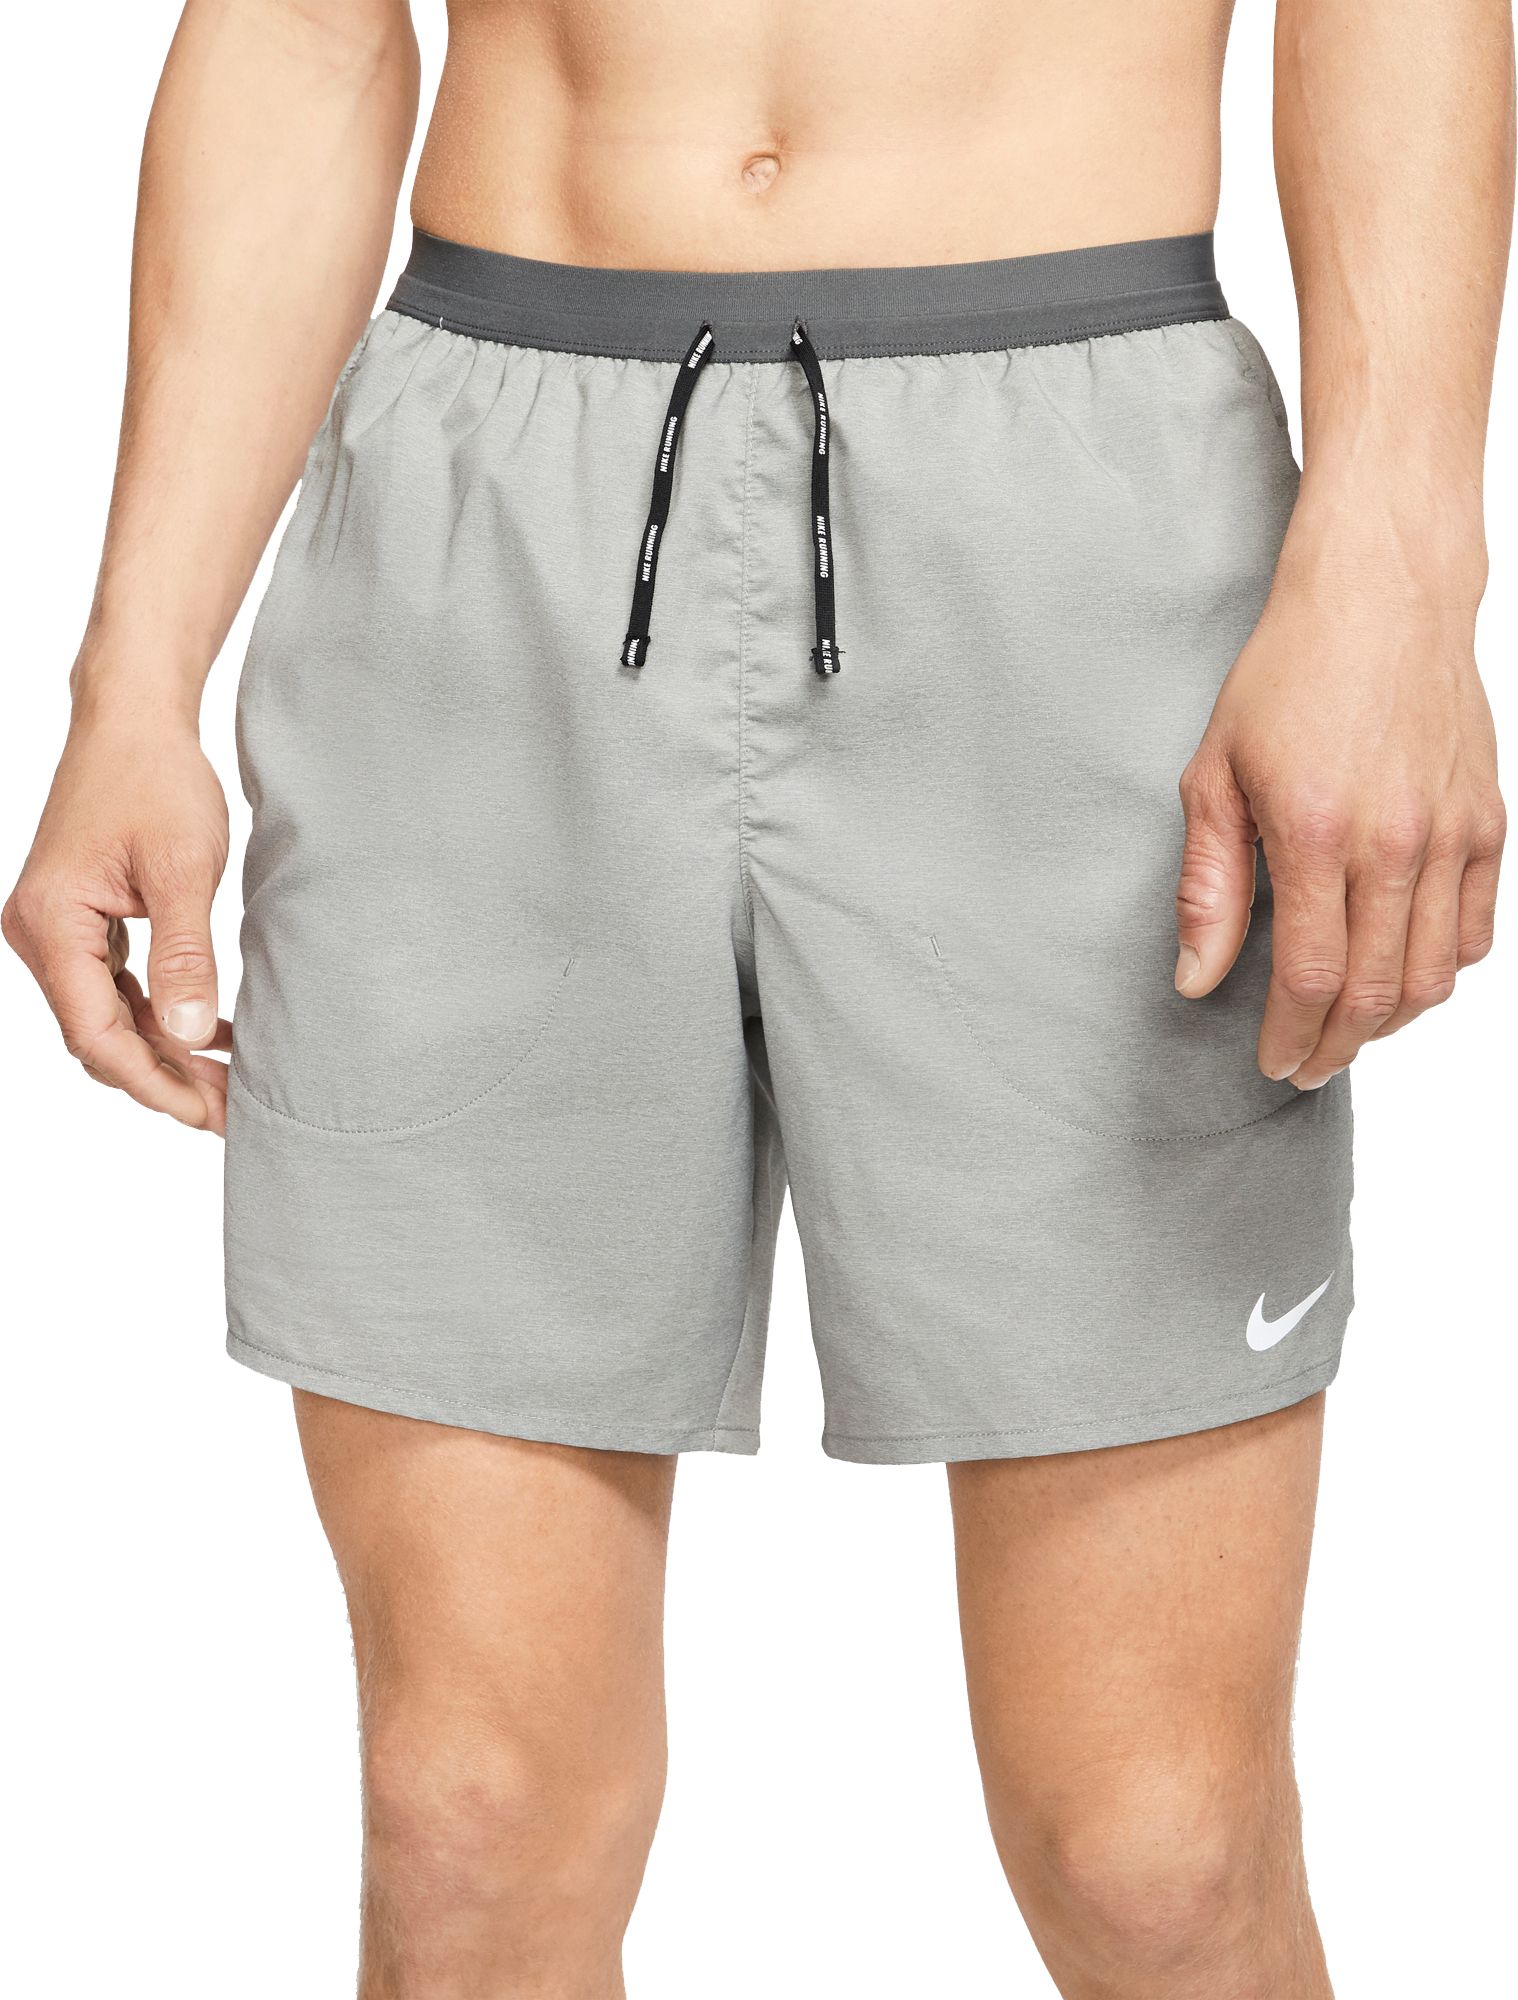 flex stride shorts